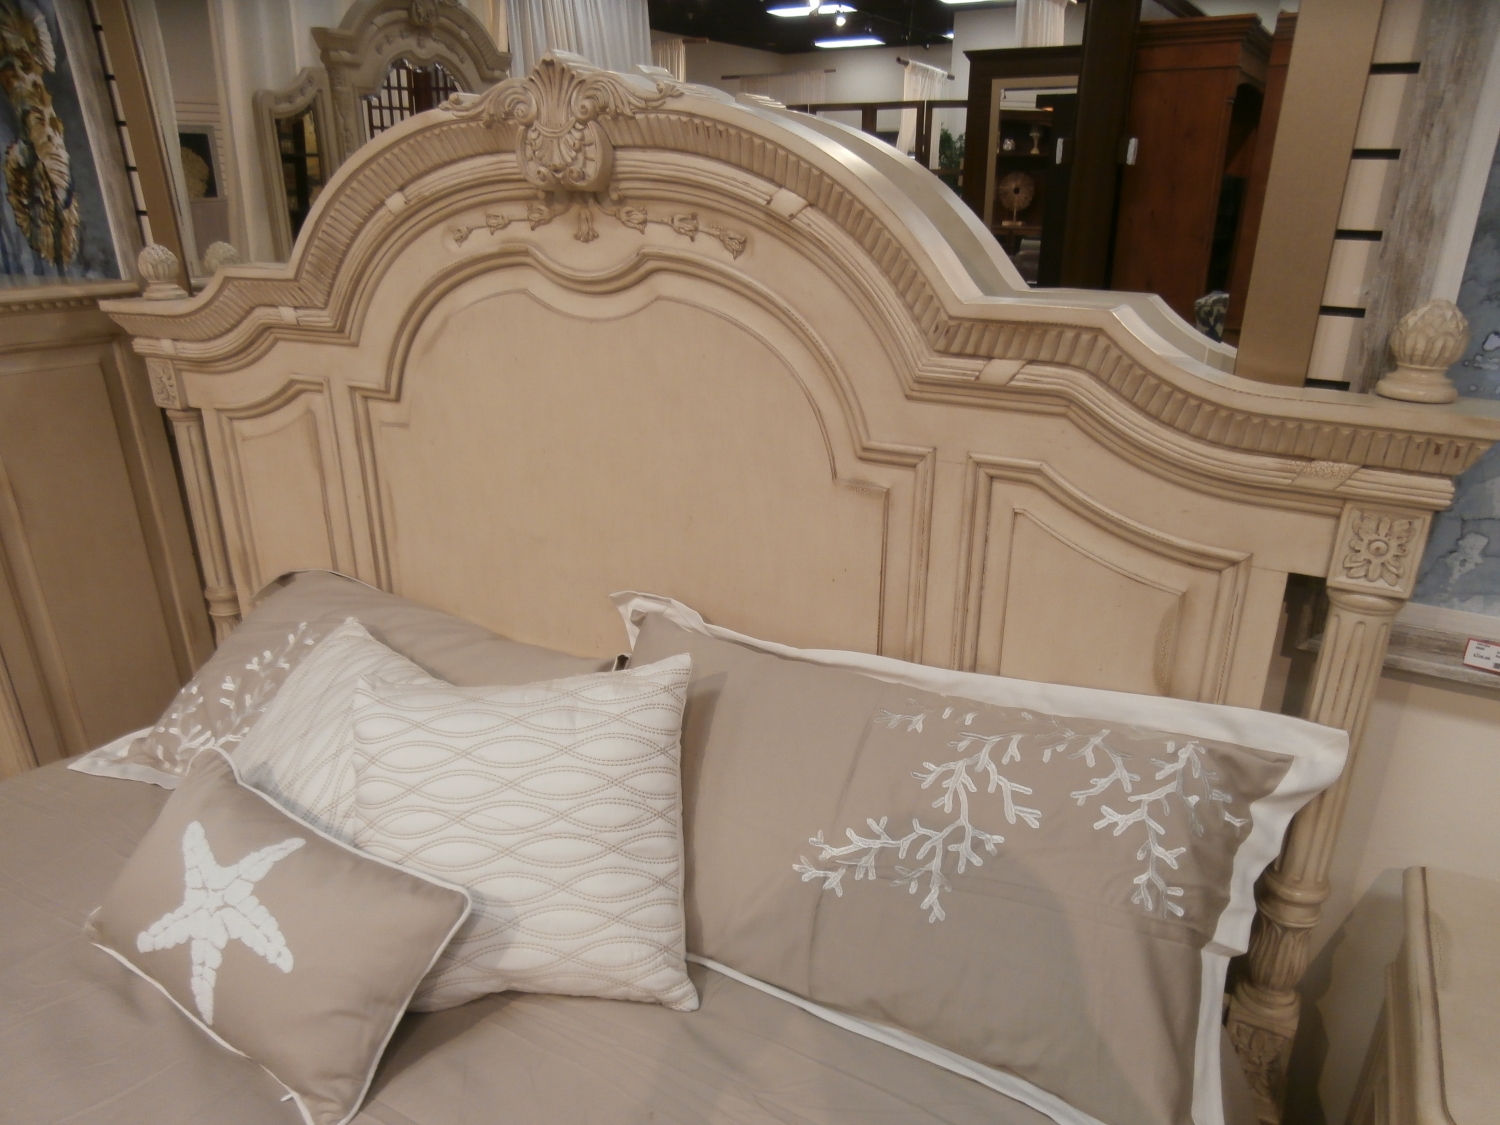 laura ashley discontinued kincaid bedroom furniture